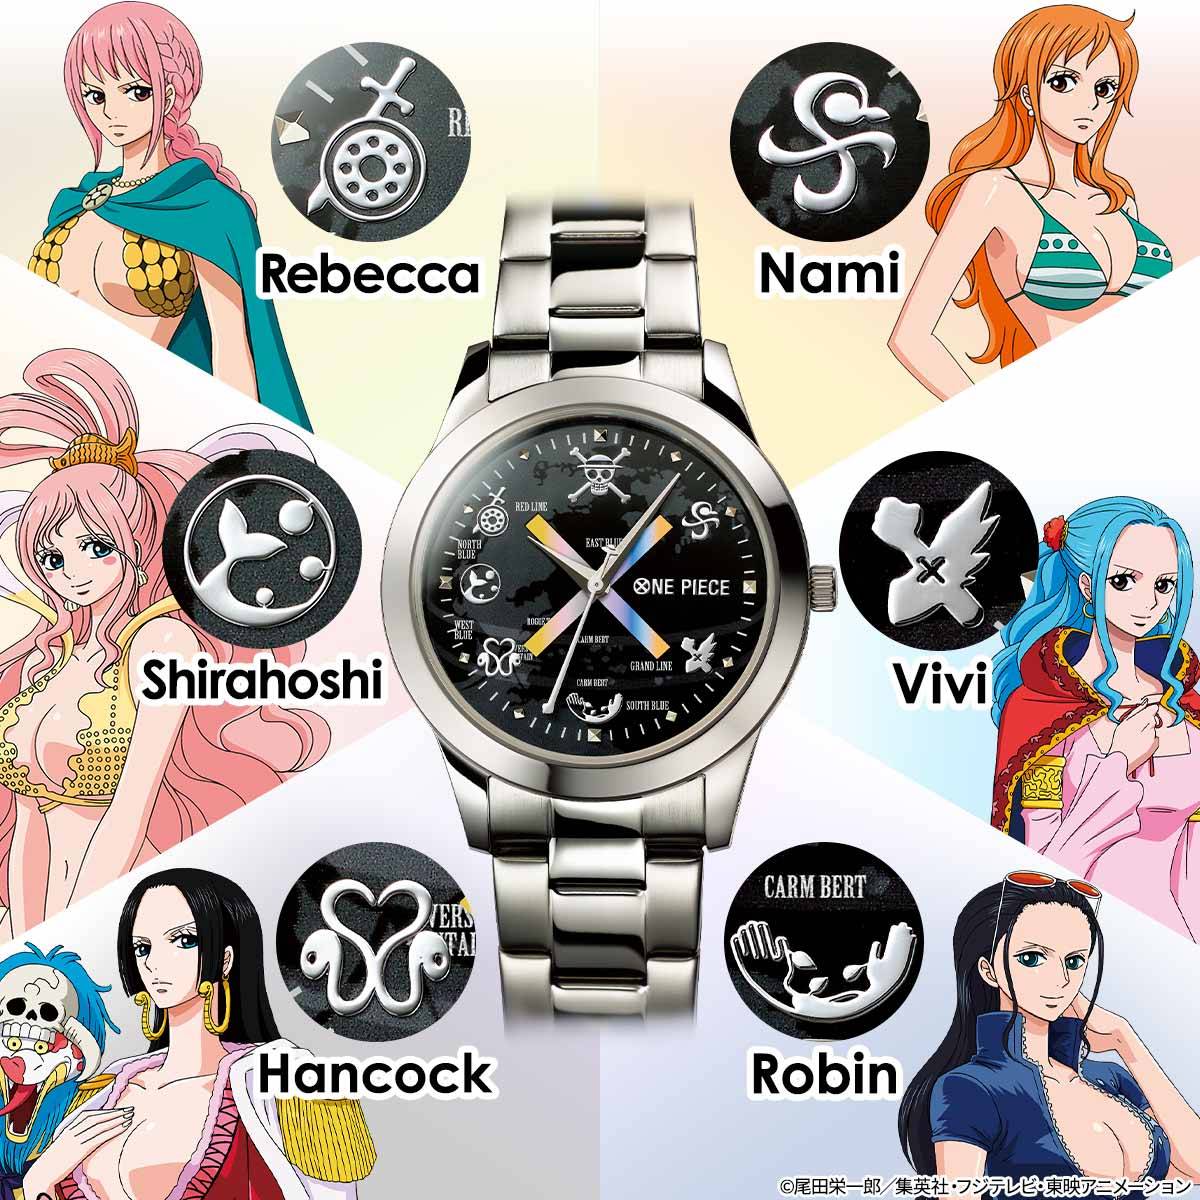 One Piece 新作腕時計 ルフィと6人の女性キャラの出会いの軌跡をたどるデザイン Numan